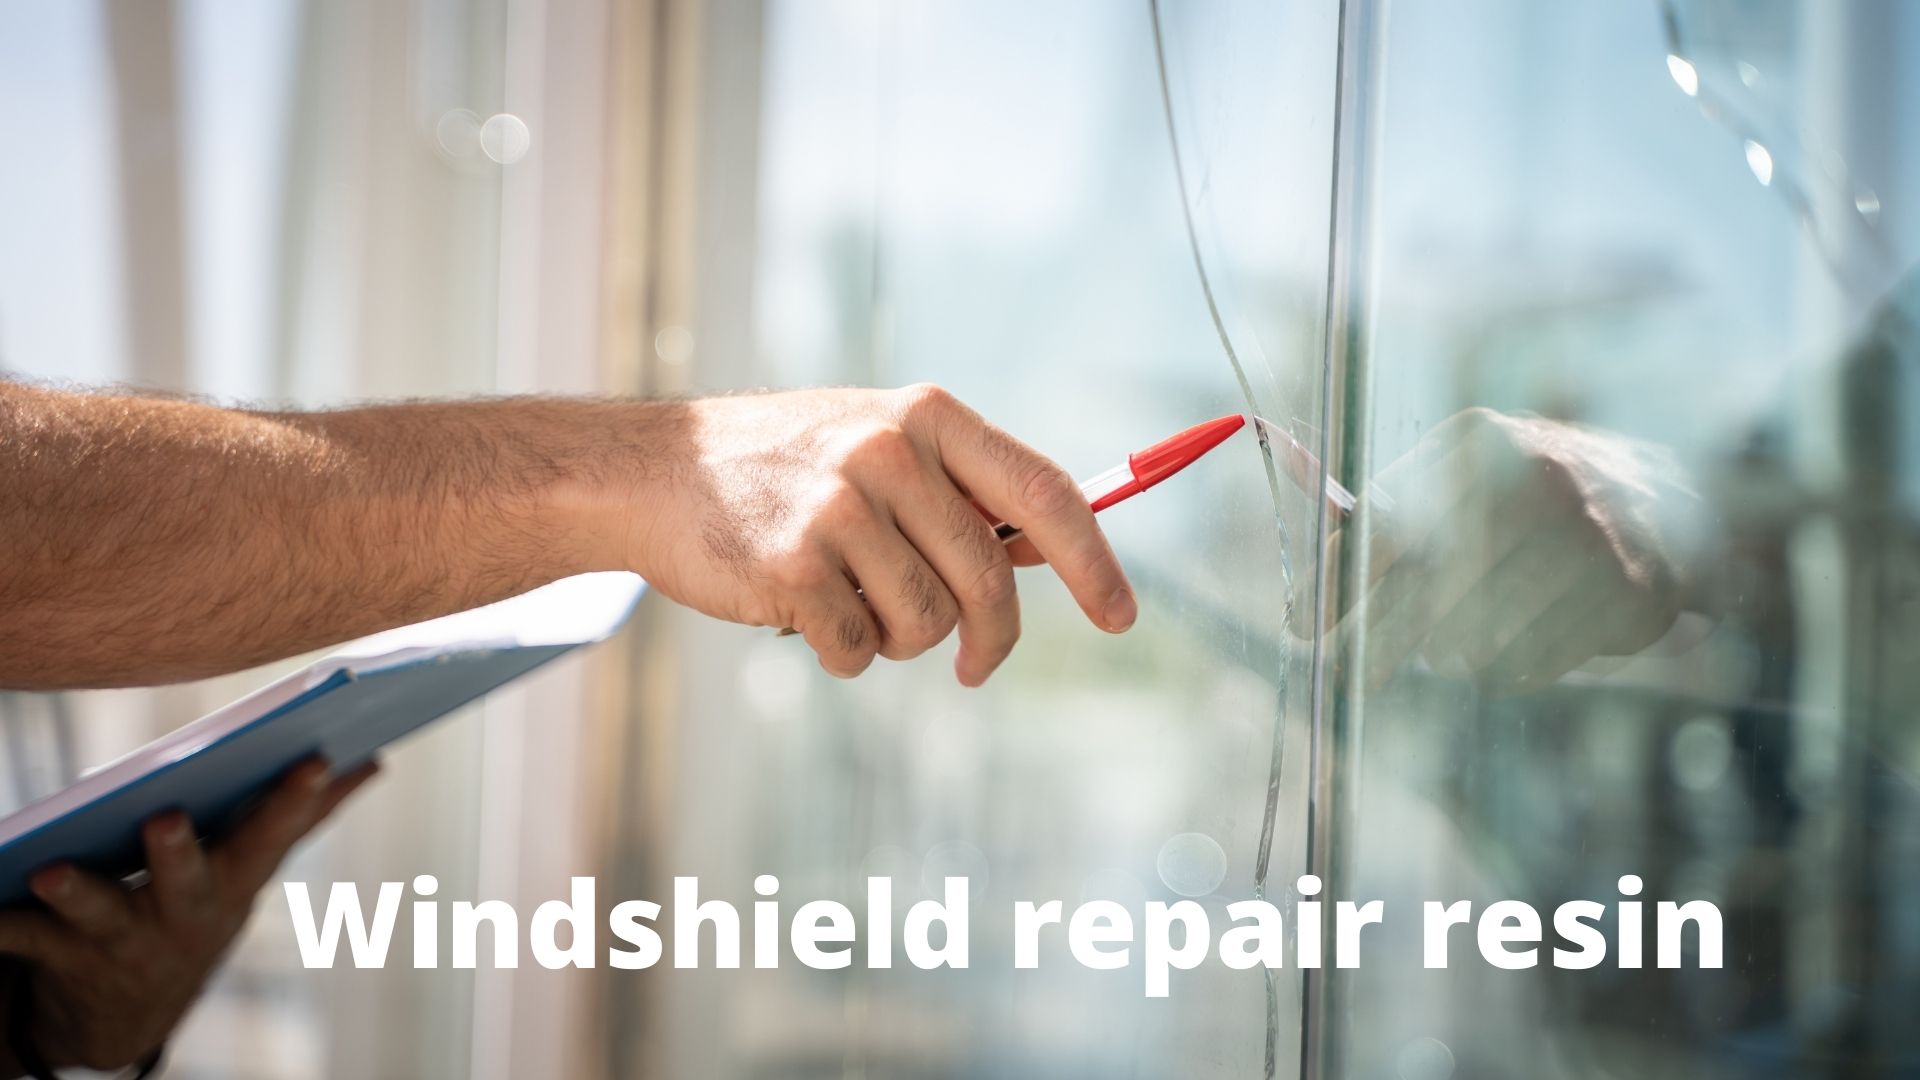 Windshield repair resin